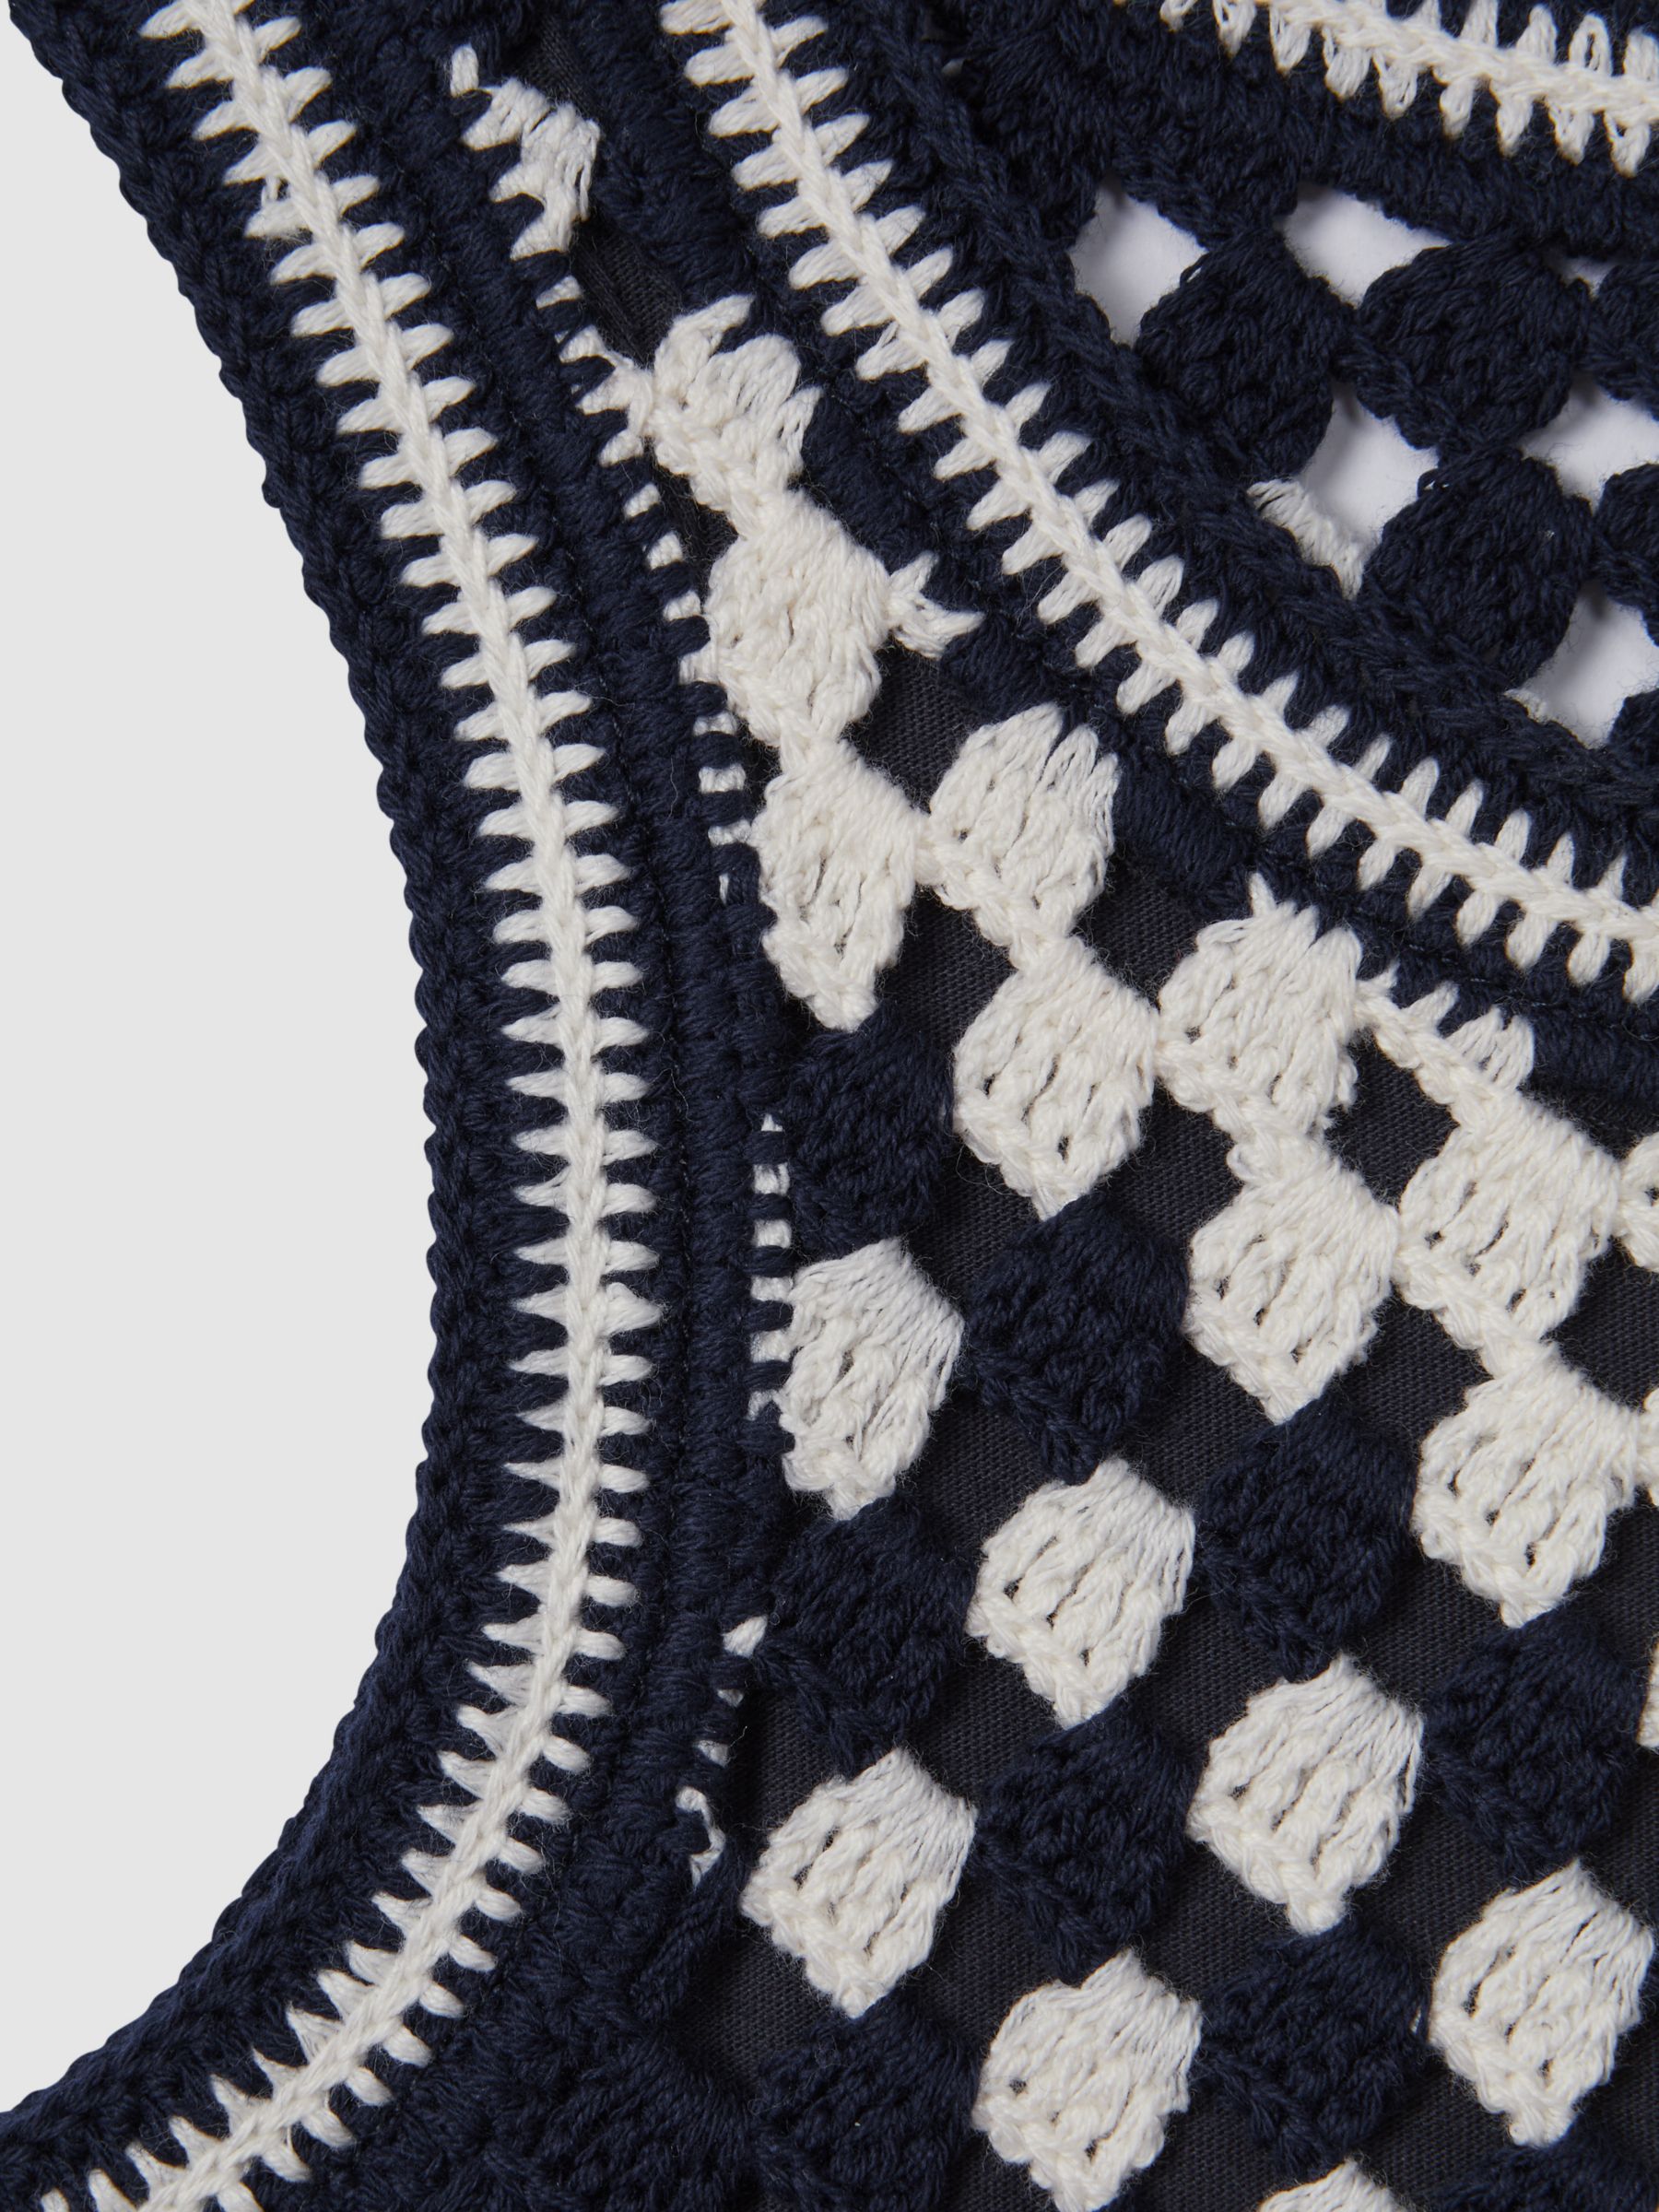 Reiss Kids' Sabrina Textured Crochet Cotton Top, Navy/Ivory, 4-5 years